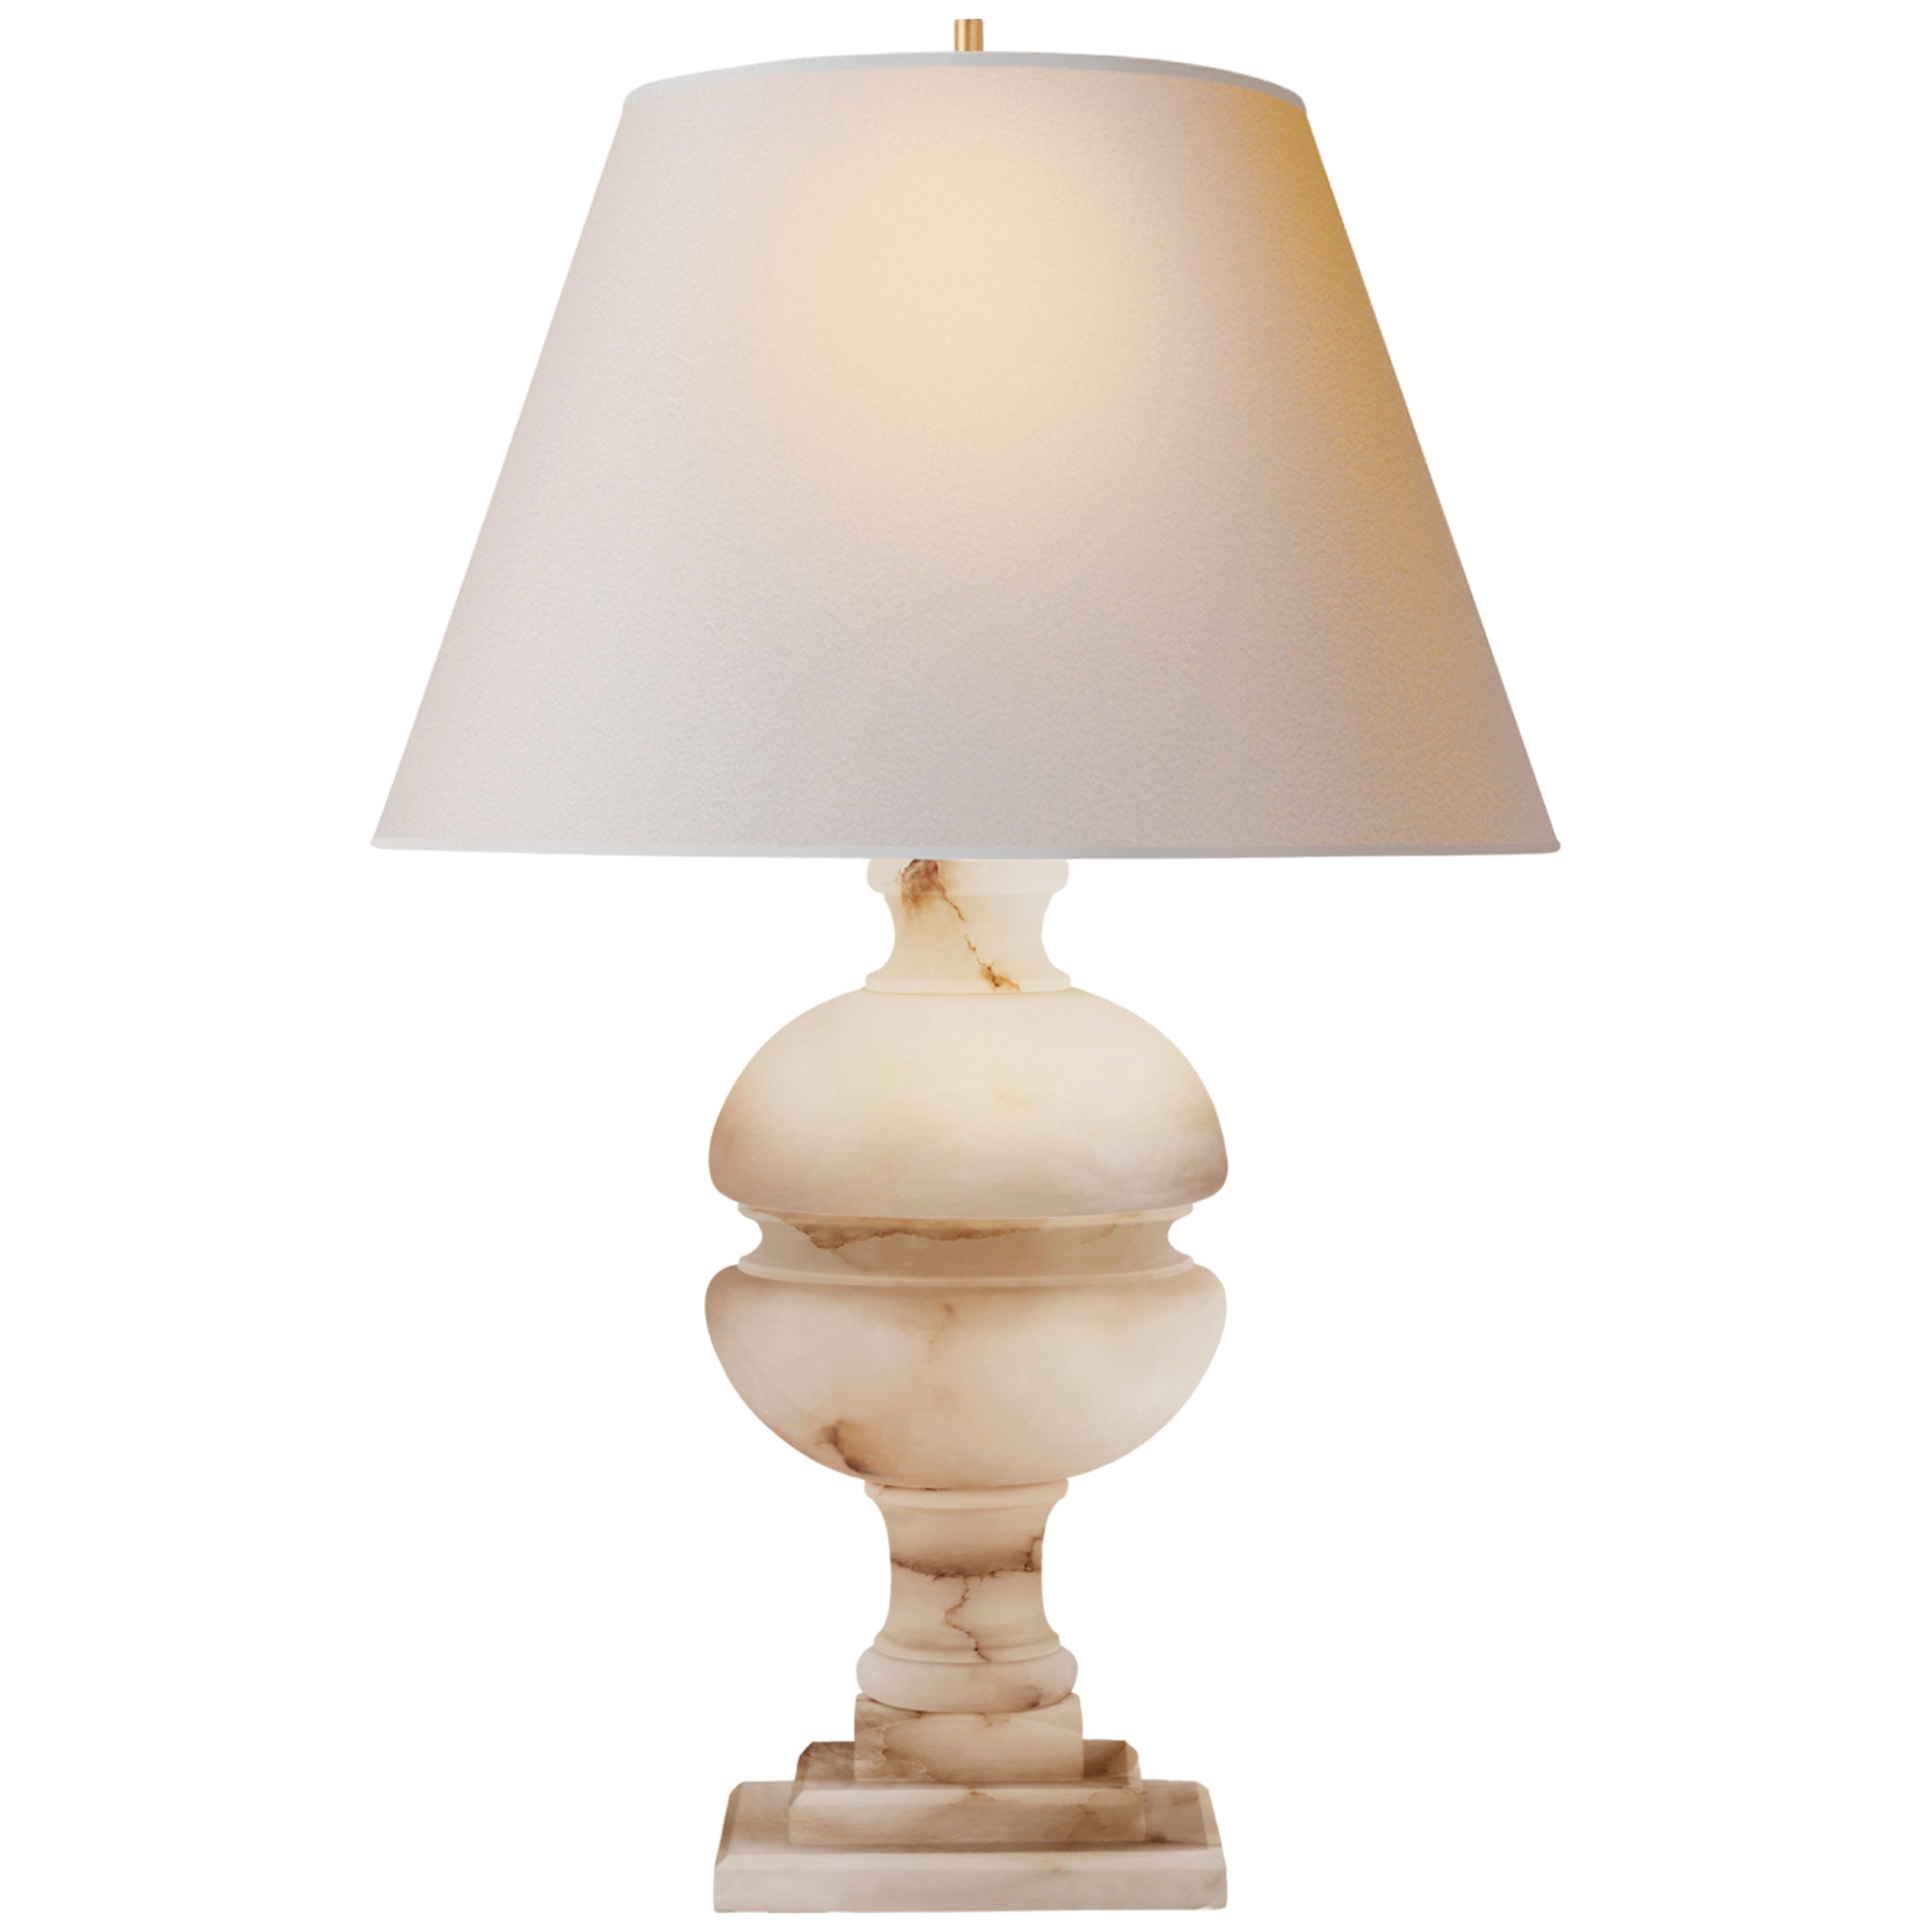 Alexa Hampton Desmond Table Lamp in Alabaster with Natural Paper Shade